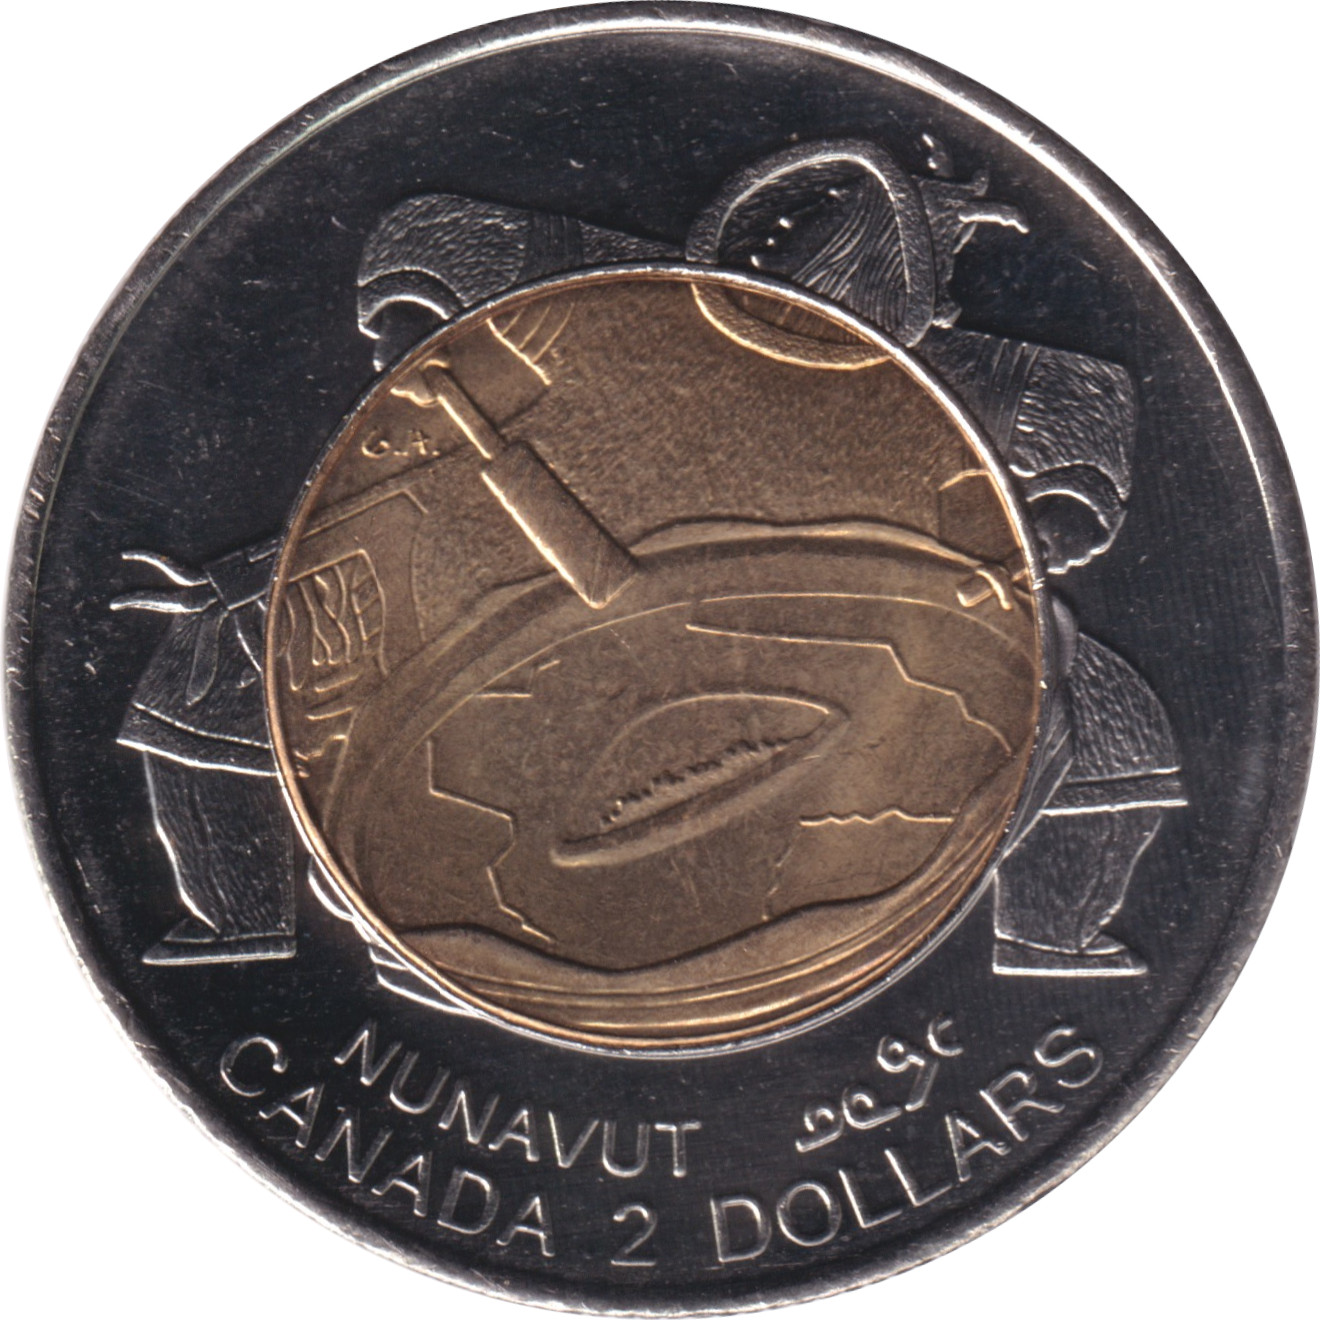 2 dollars - Nunavut